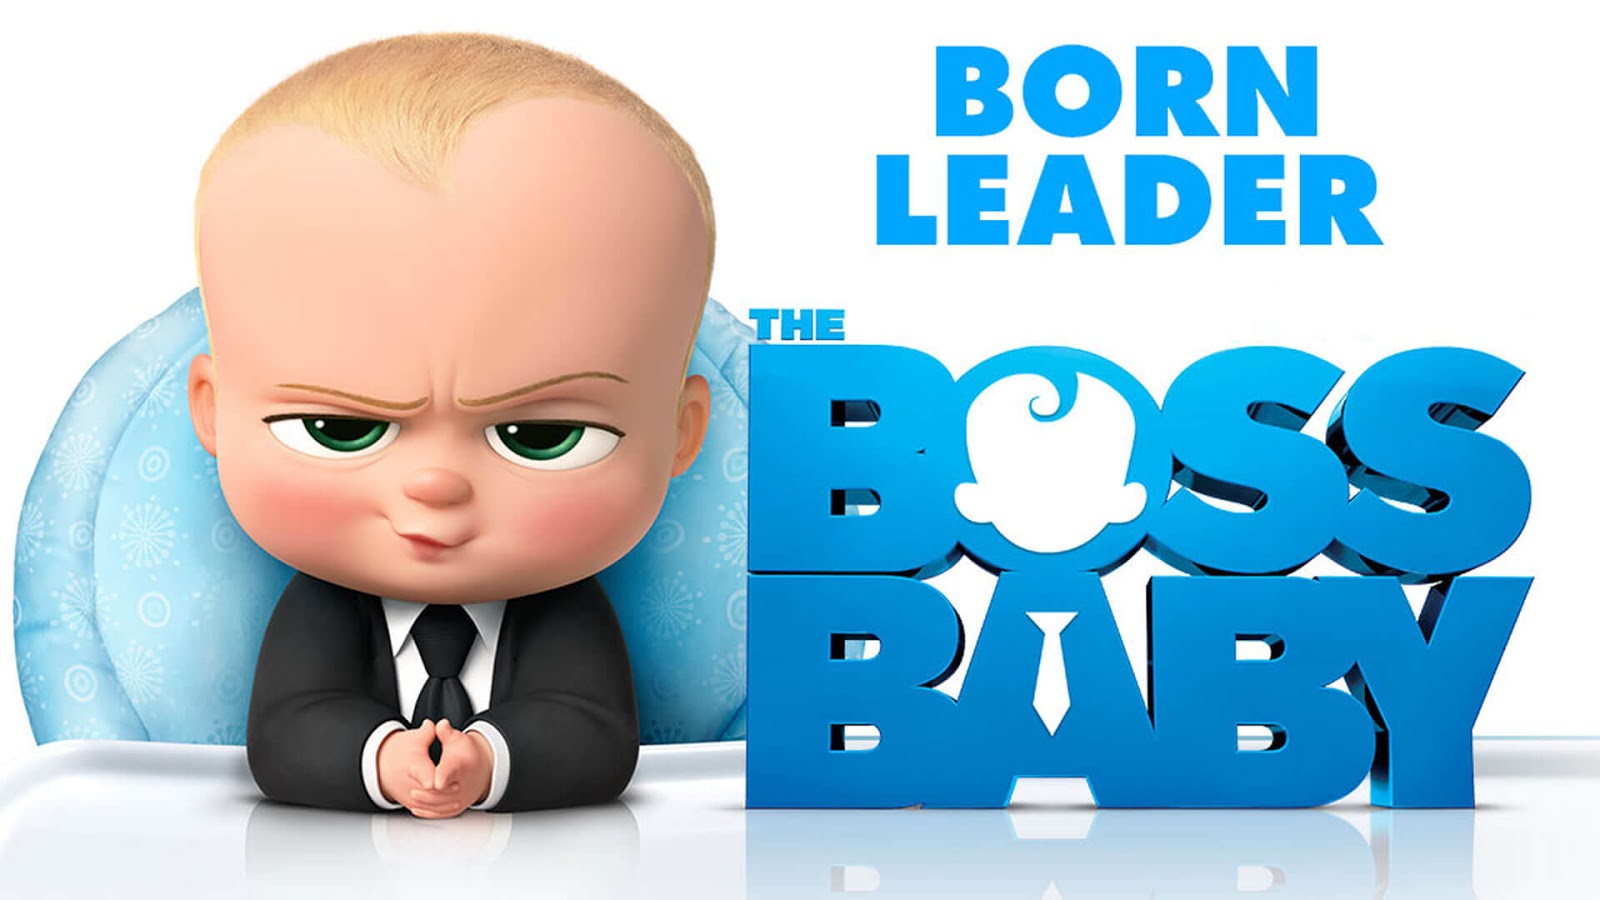 فيلم انيميشن The Boss Baby بلوراي 1080P مترجم اون لاين تحميل و مشاهدة